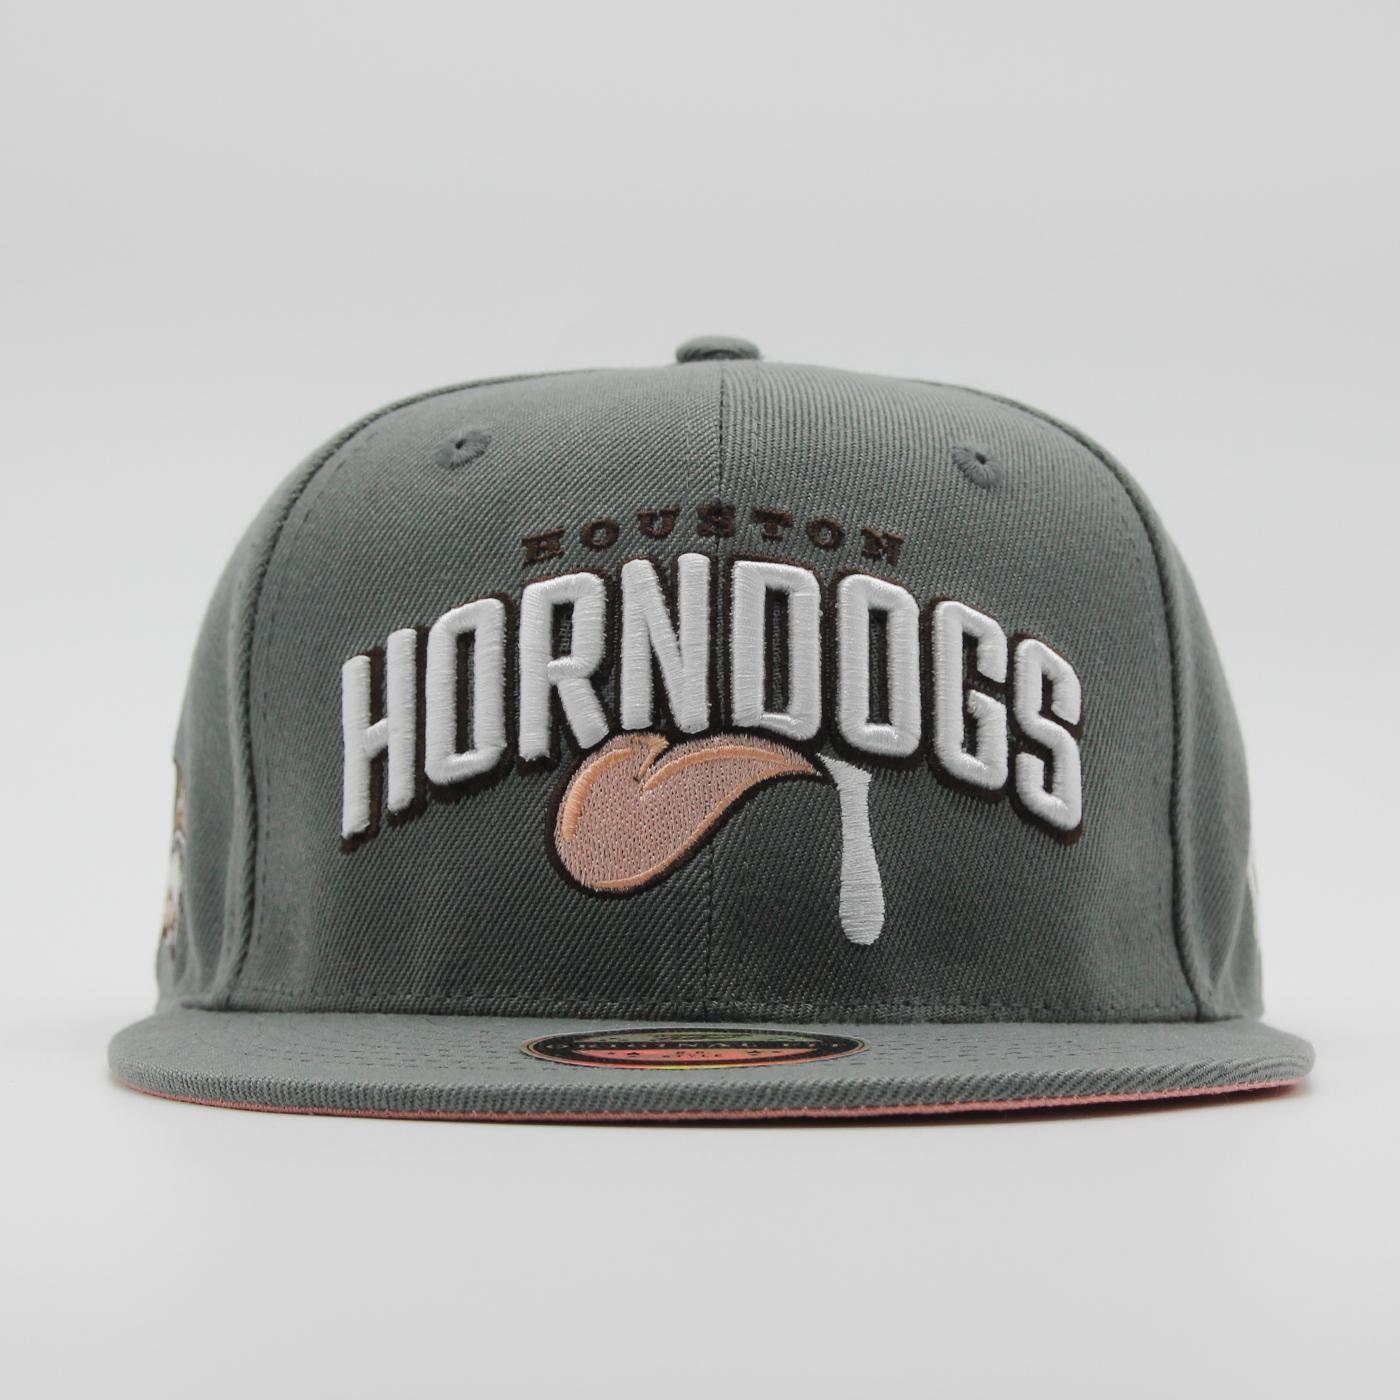 Naughty League Houston Horndogs Text Logo fitted grey - Shop-Tetuan